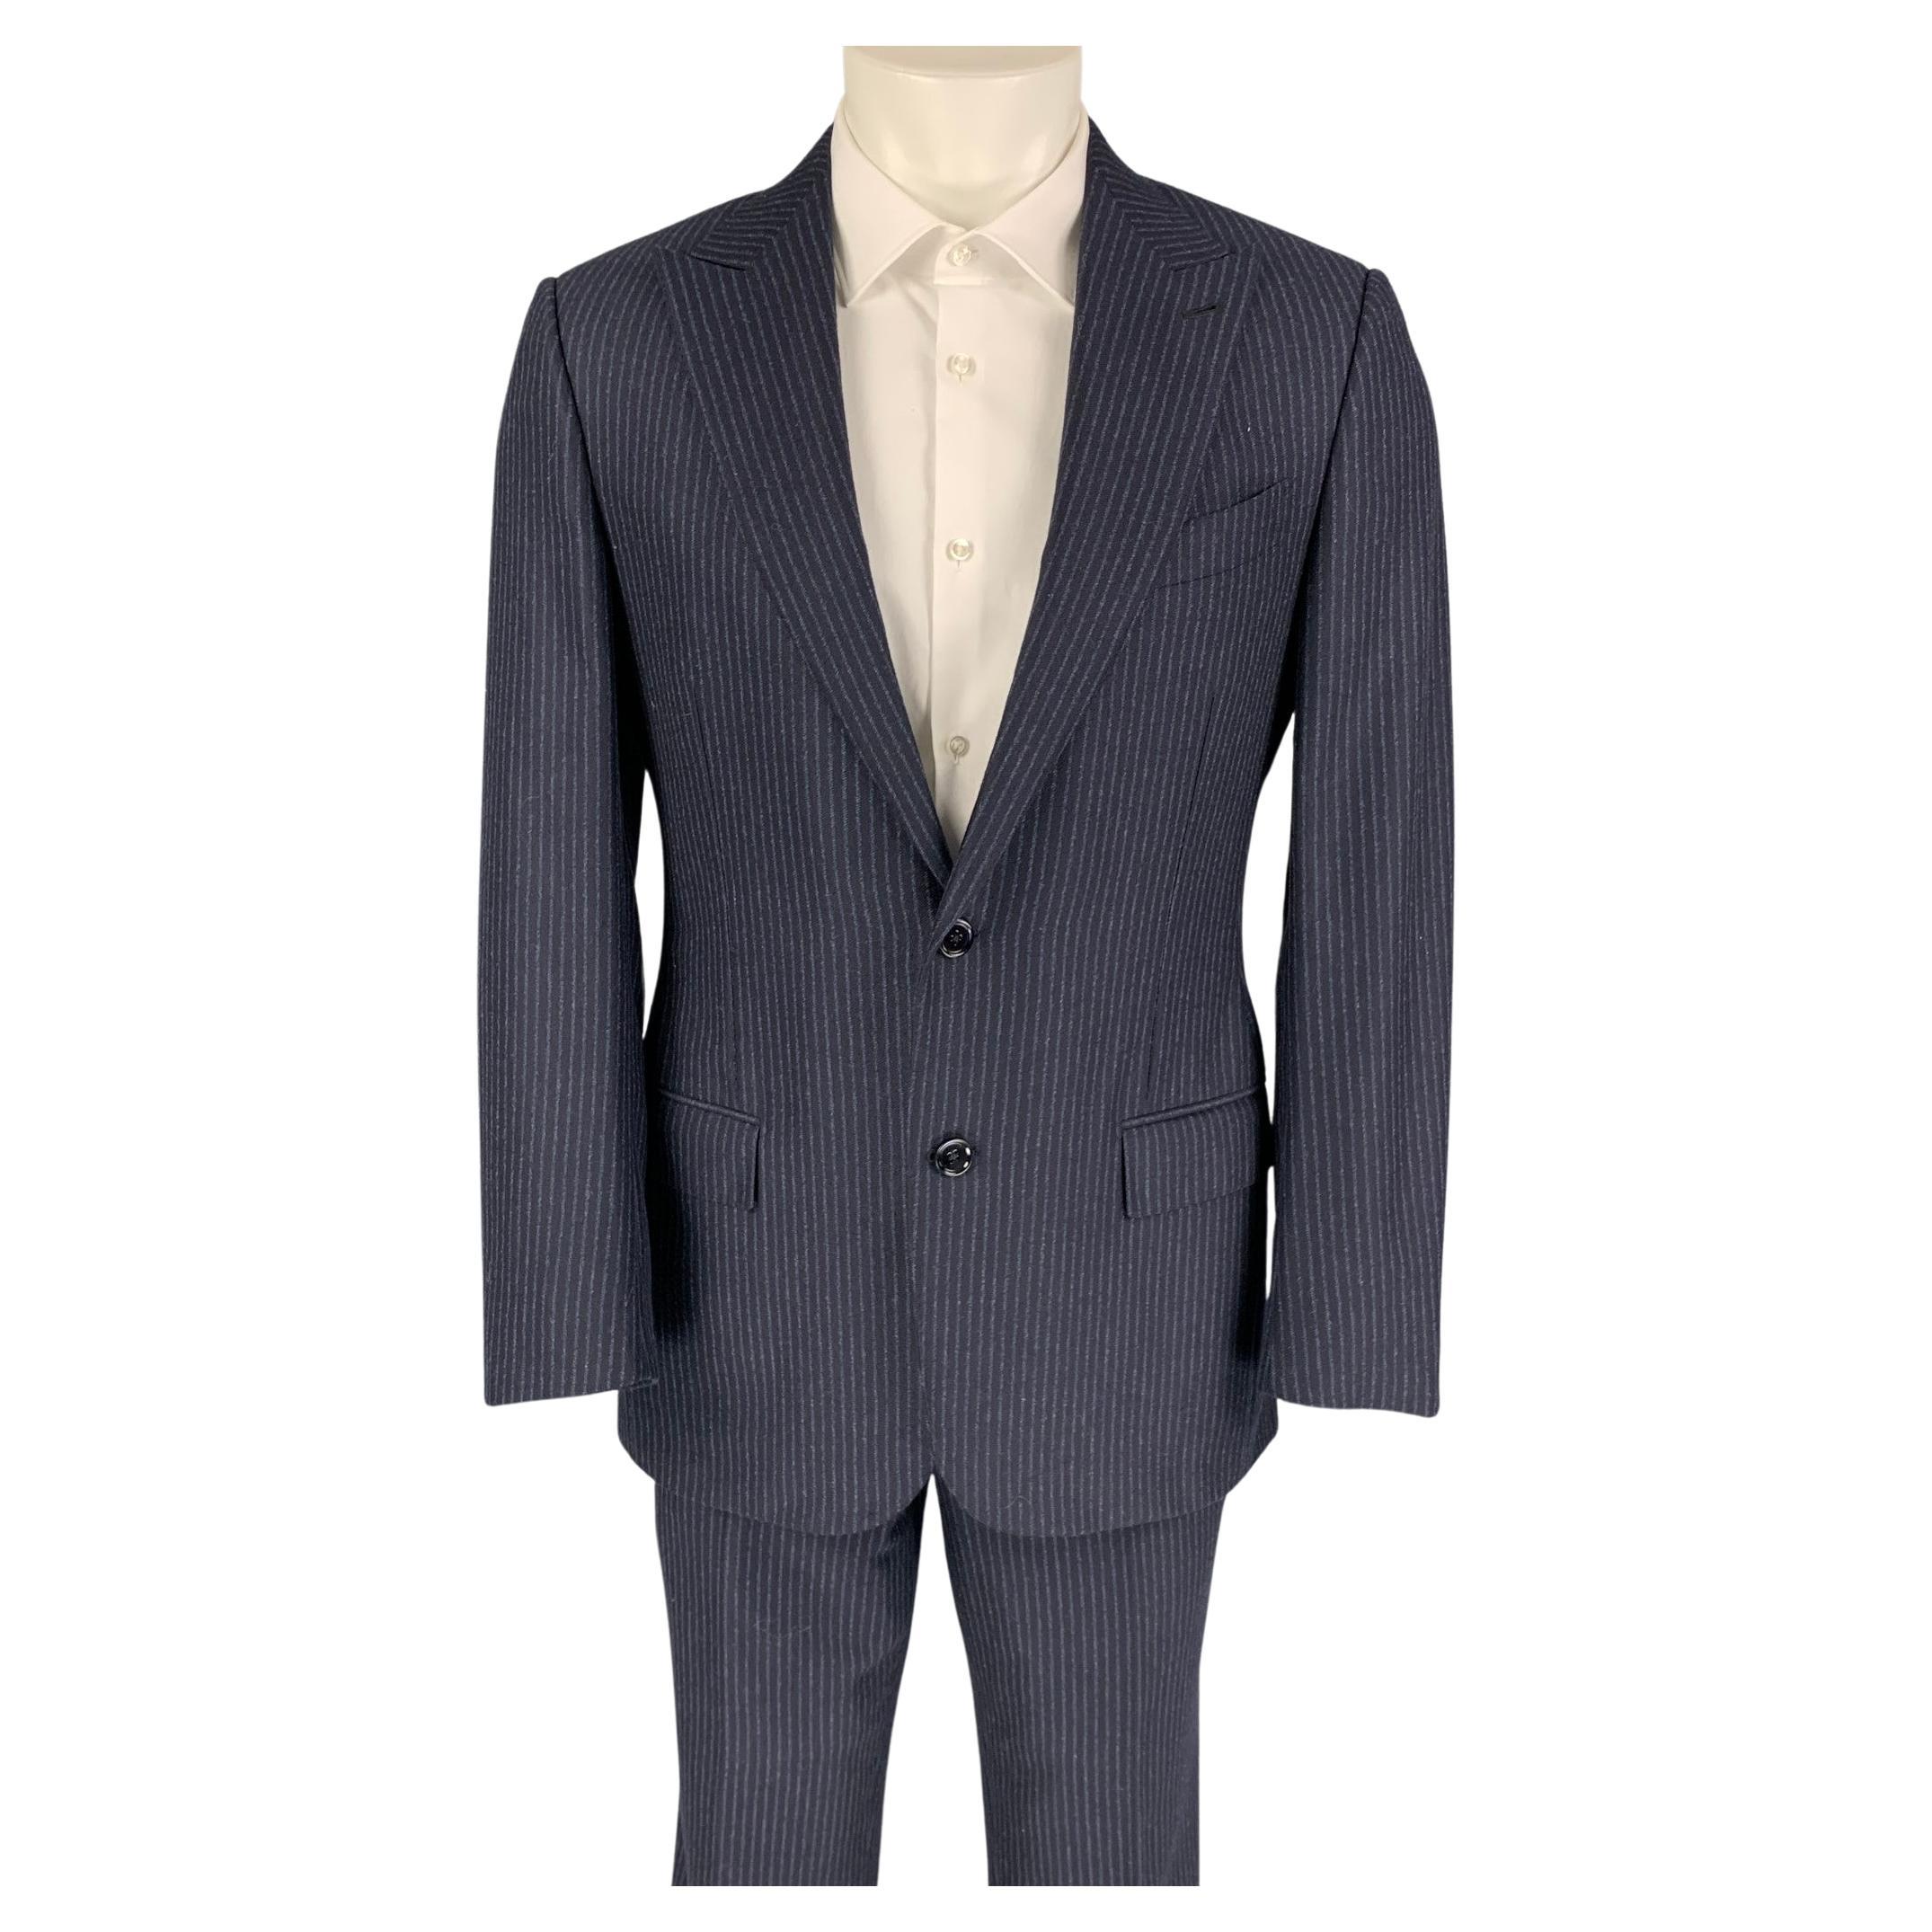 ERMENEGILDO ZEGNA Size 40 Navy Blue Chalkstripe Wool Cashmere Suit